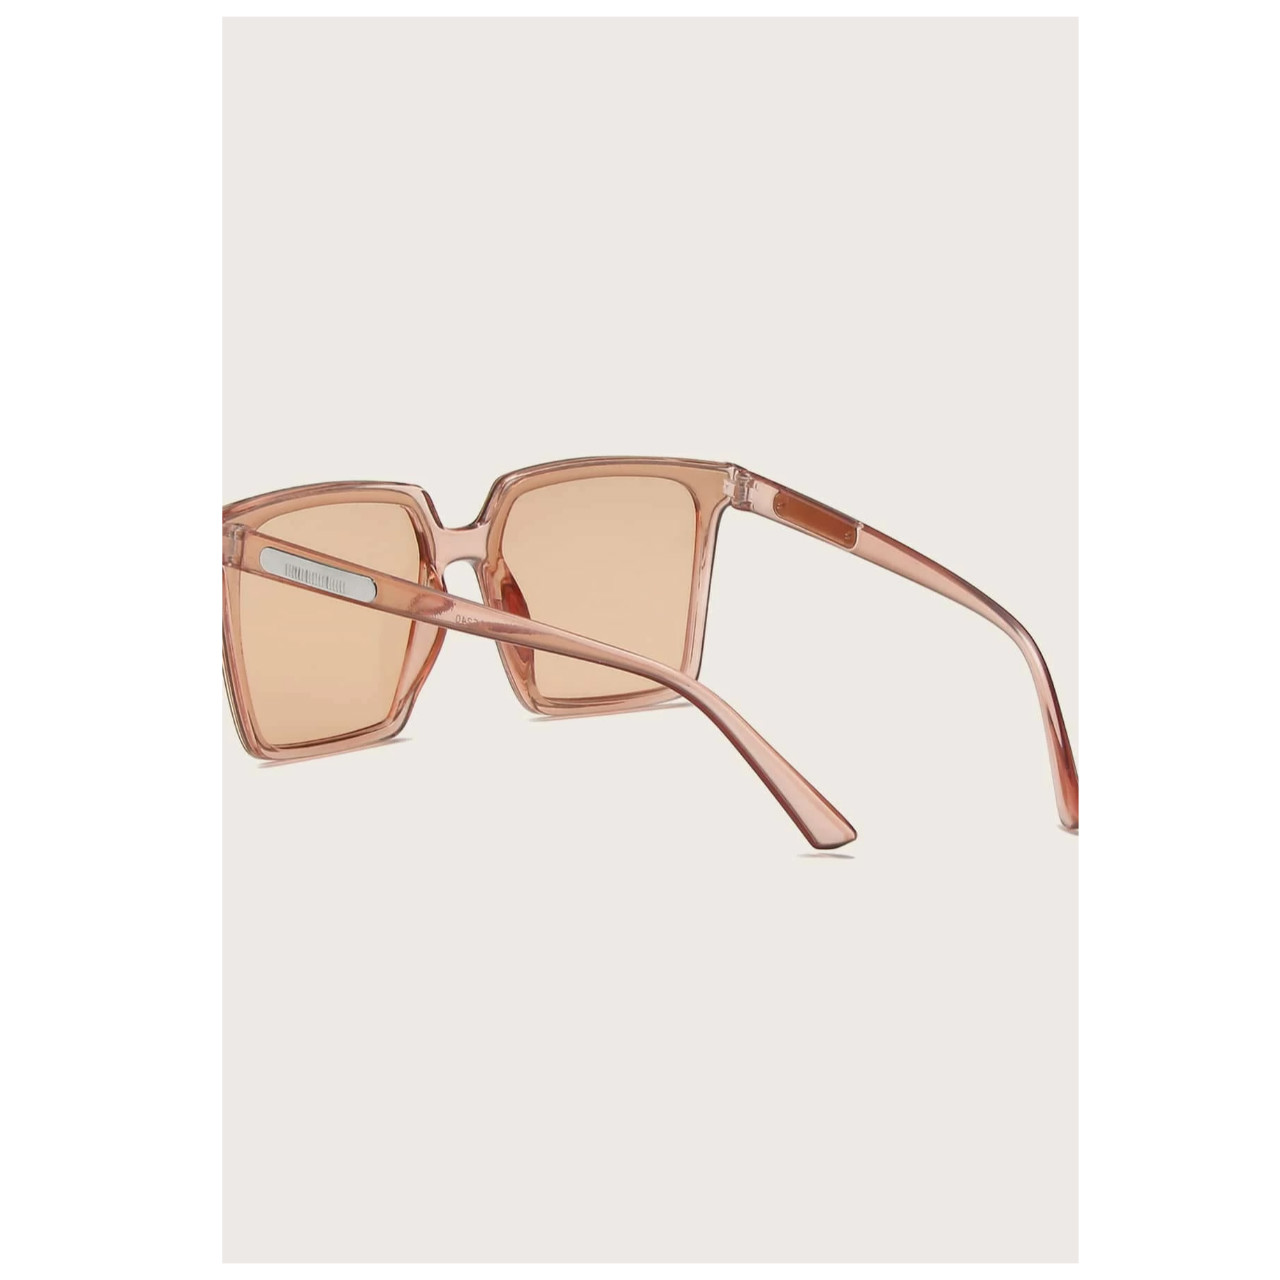 Acrylic frame sunglasses